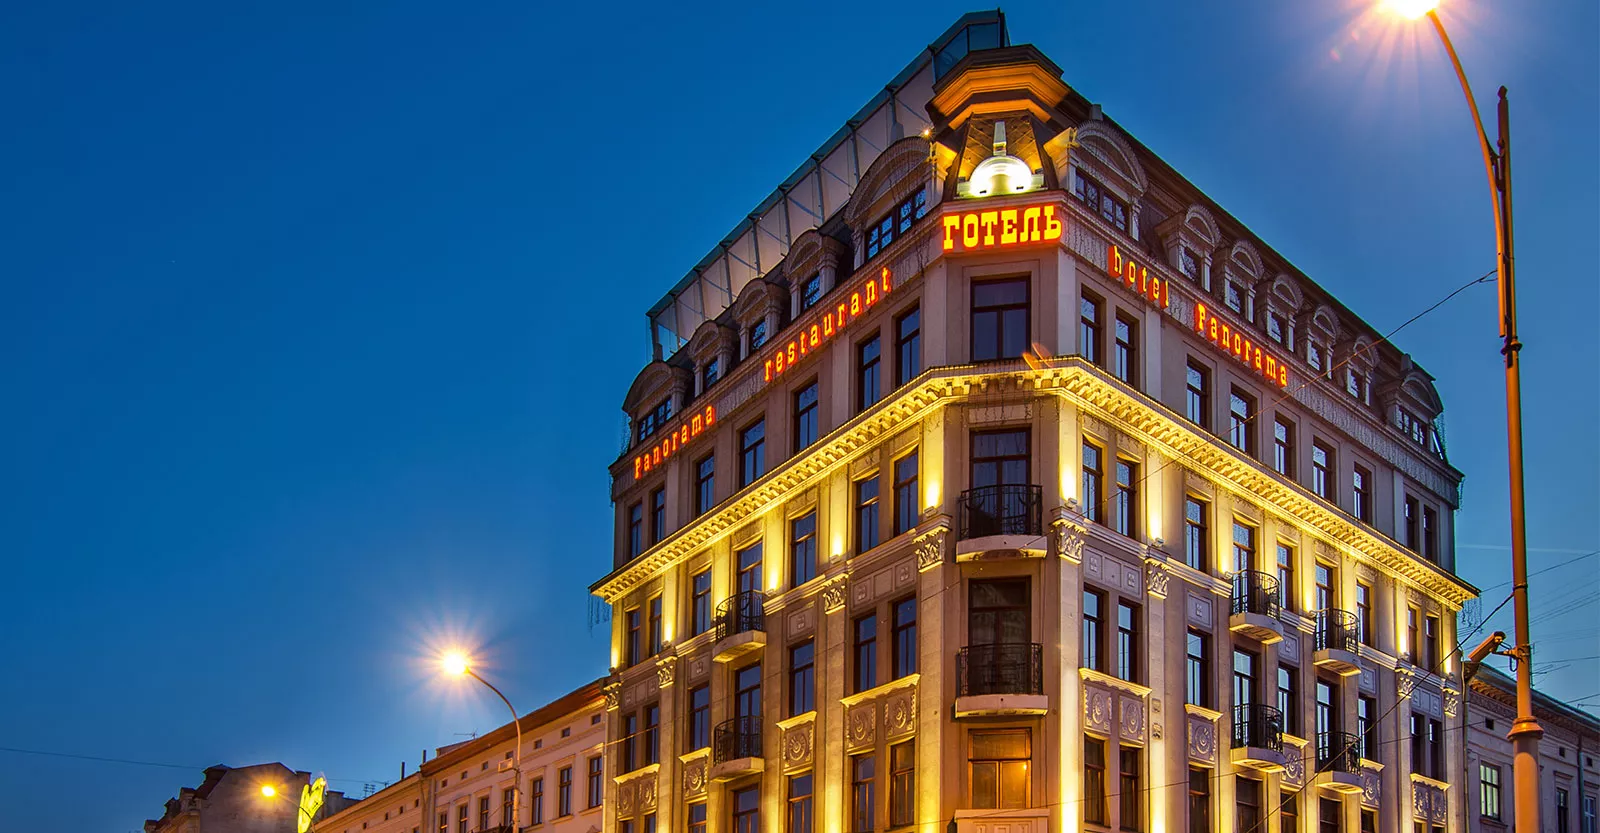 Panorama Hotel in Ukraine, Europe | Observation Decks,Restaurants - Rated 3.7